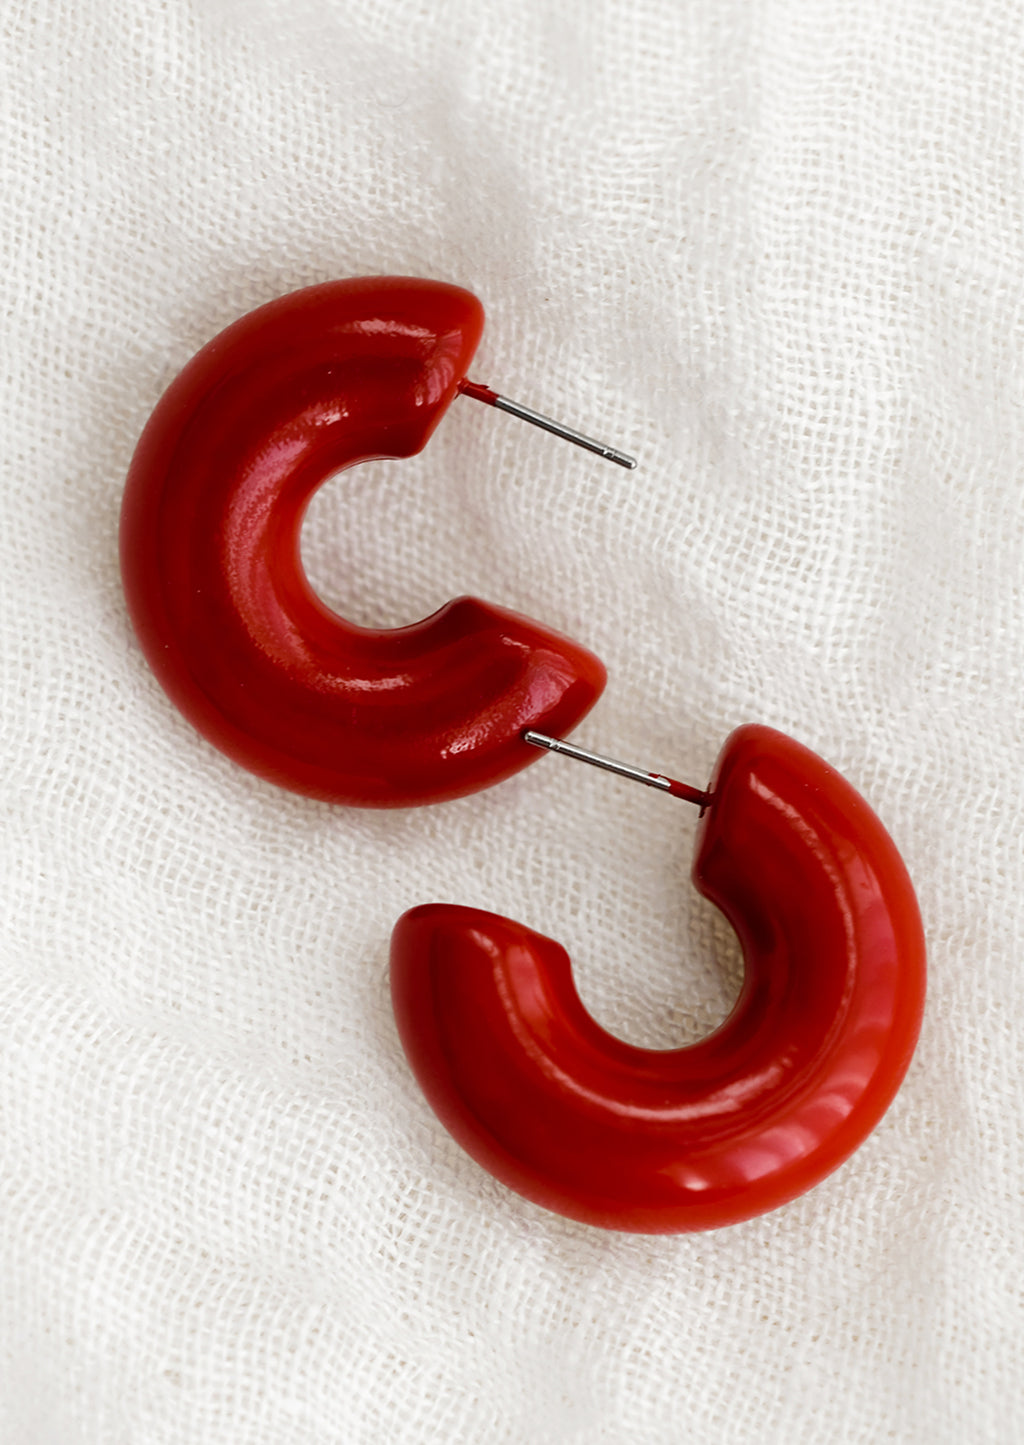 Crimson: A pair of chunky gloss finish hoop earrings in crimson red.